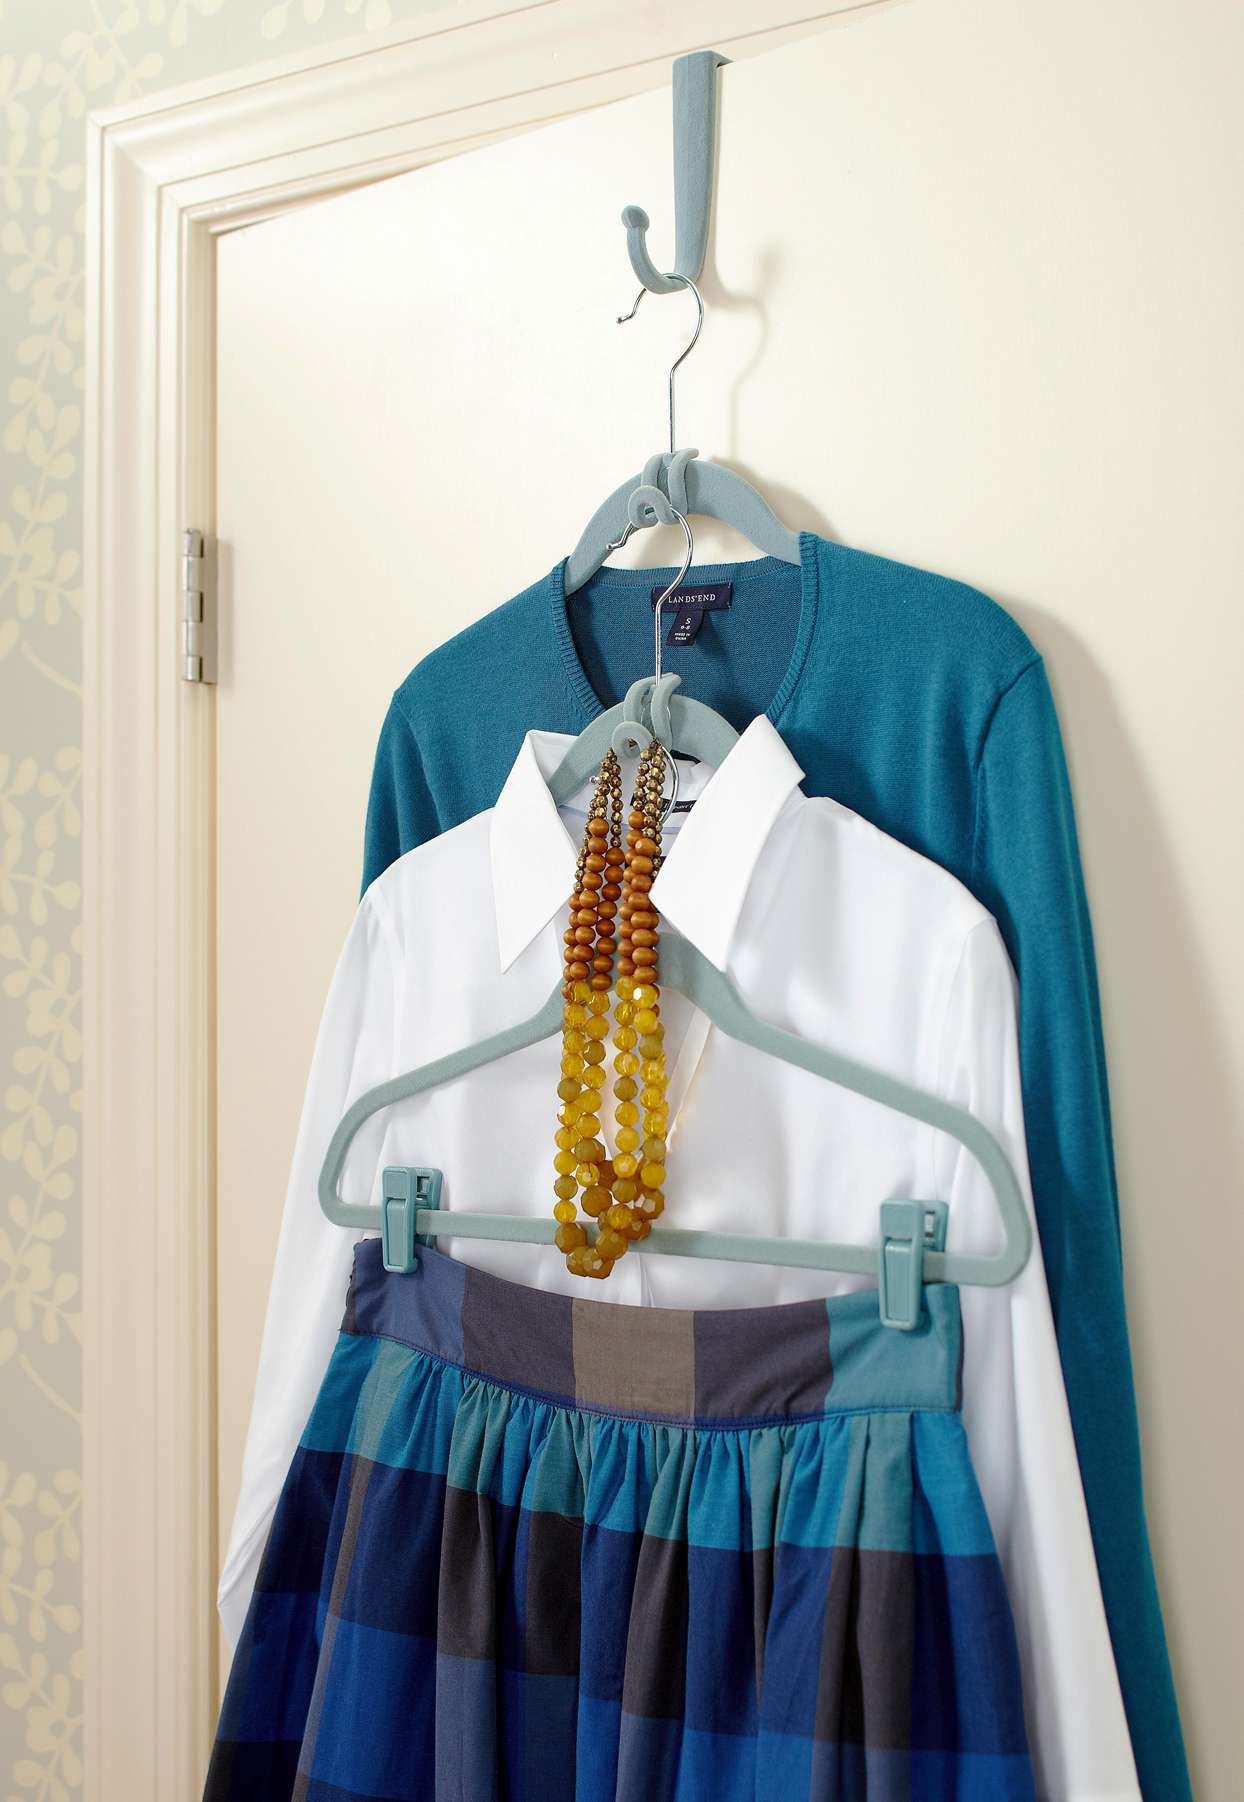 outfit displayed on hanging door hook